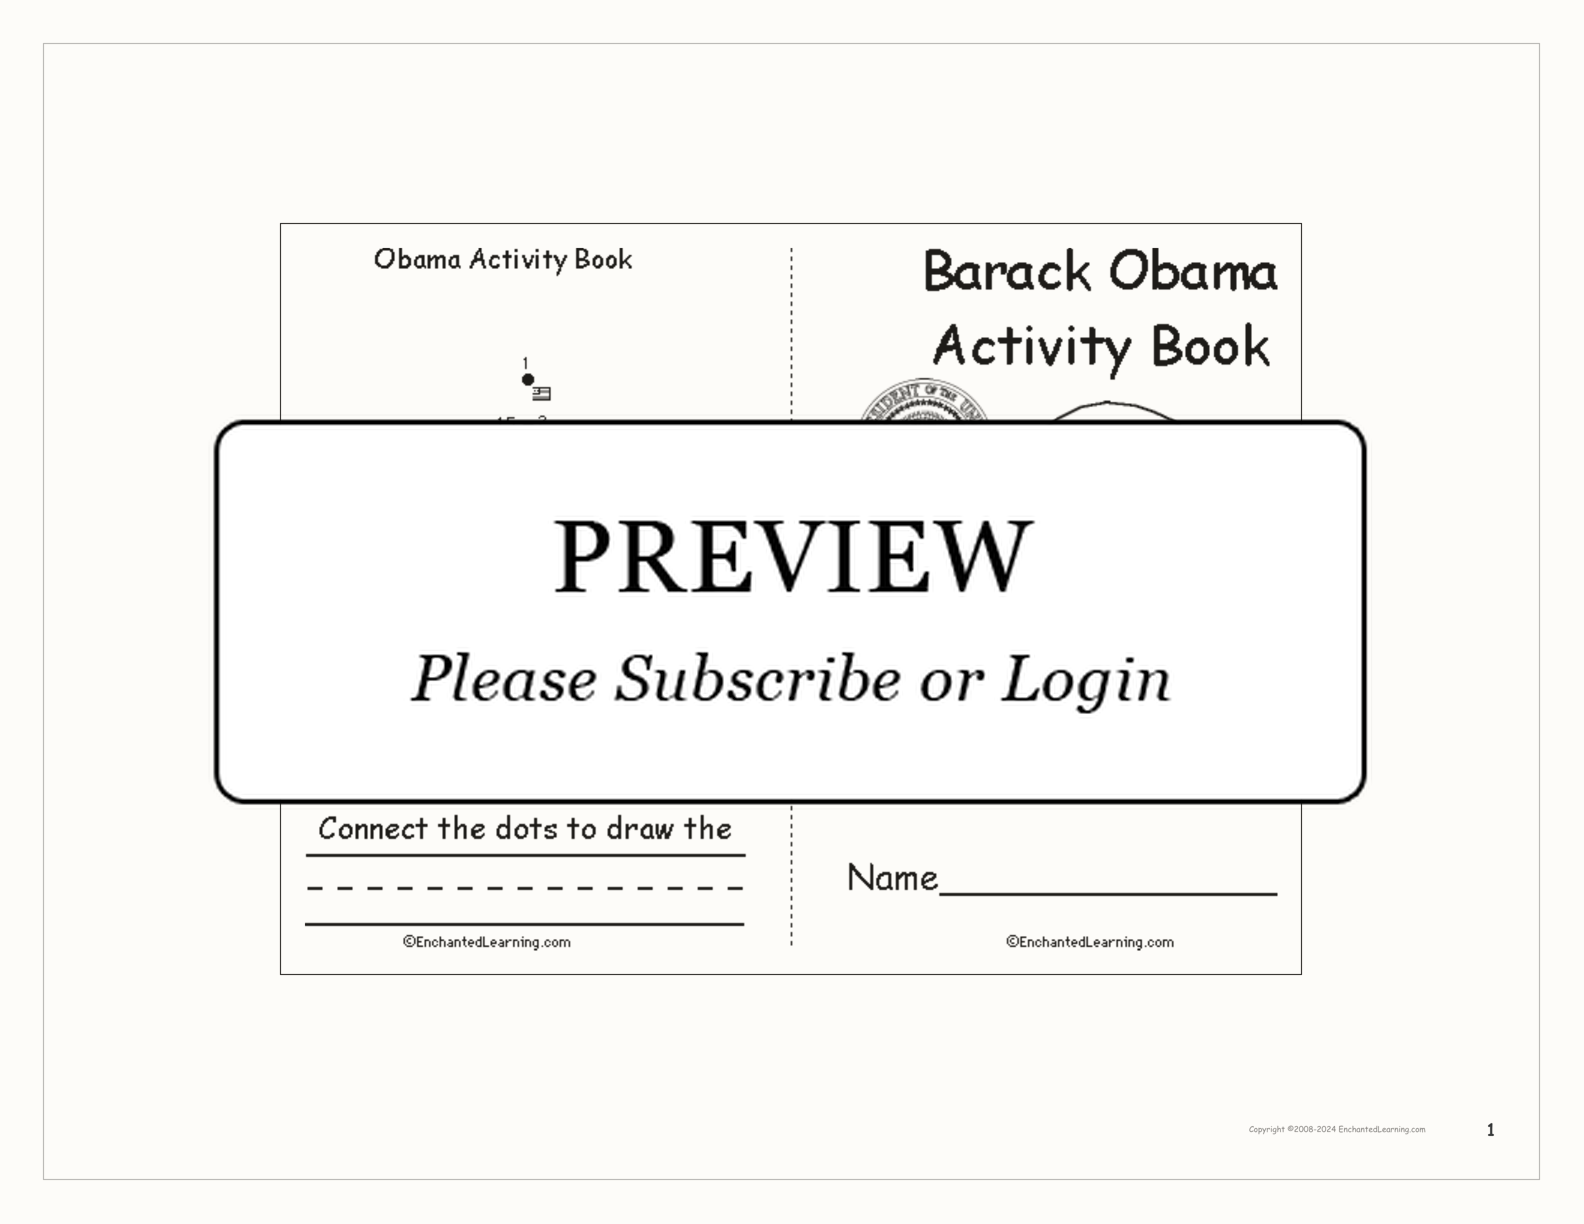 Barack Obama Activity Book interactive printout page 1